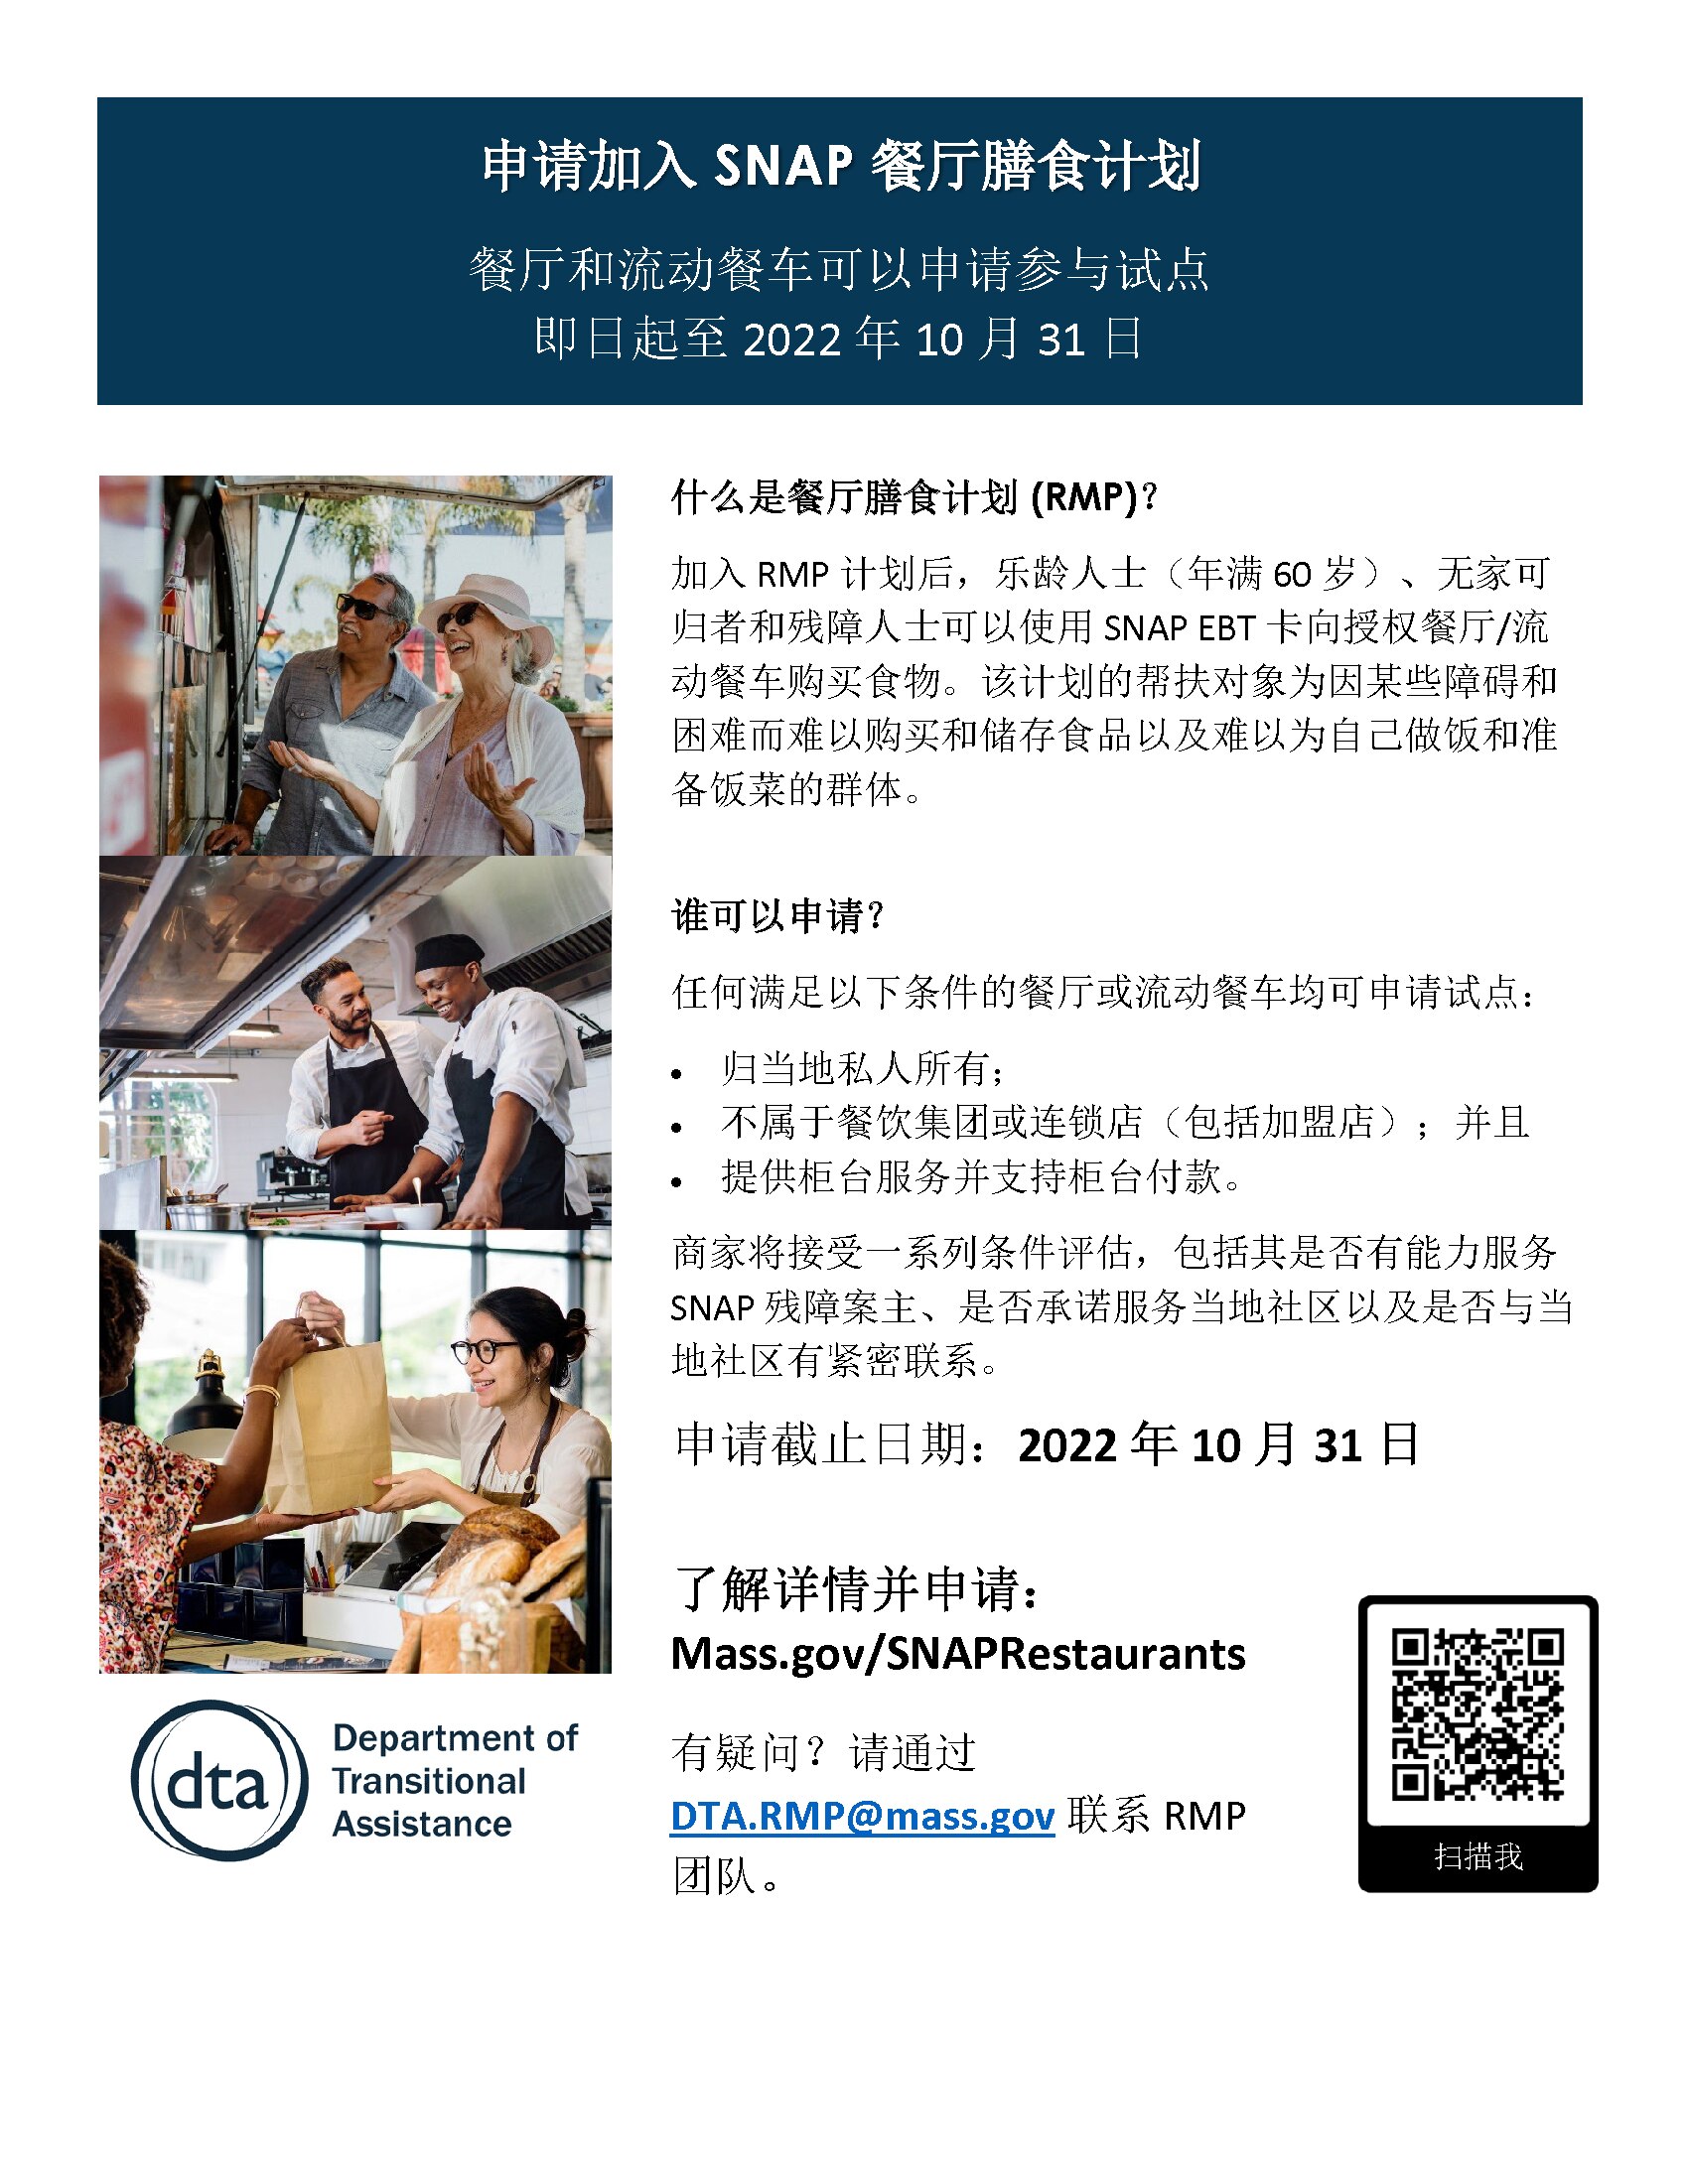 SNAP Restaurant Meals Program (RMP) Flyer for Vendors - Chinese